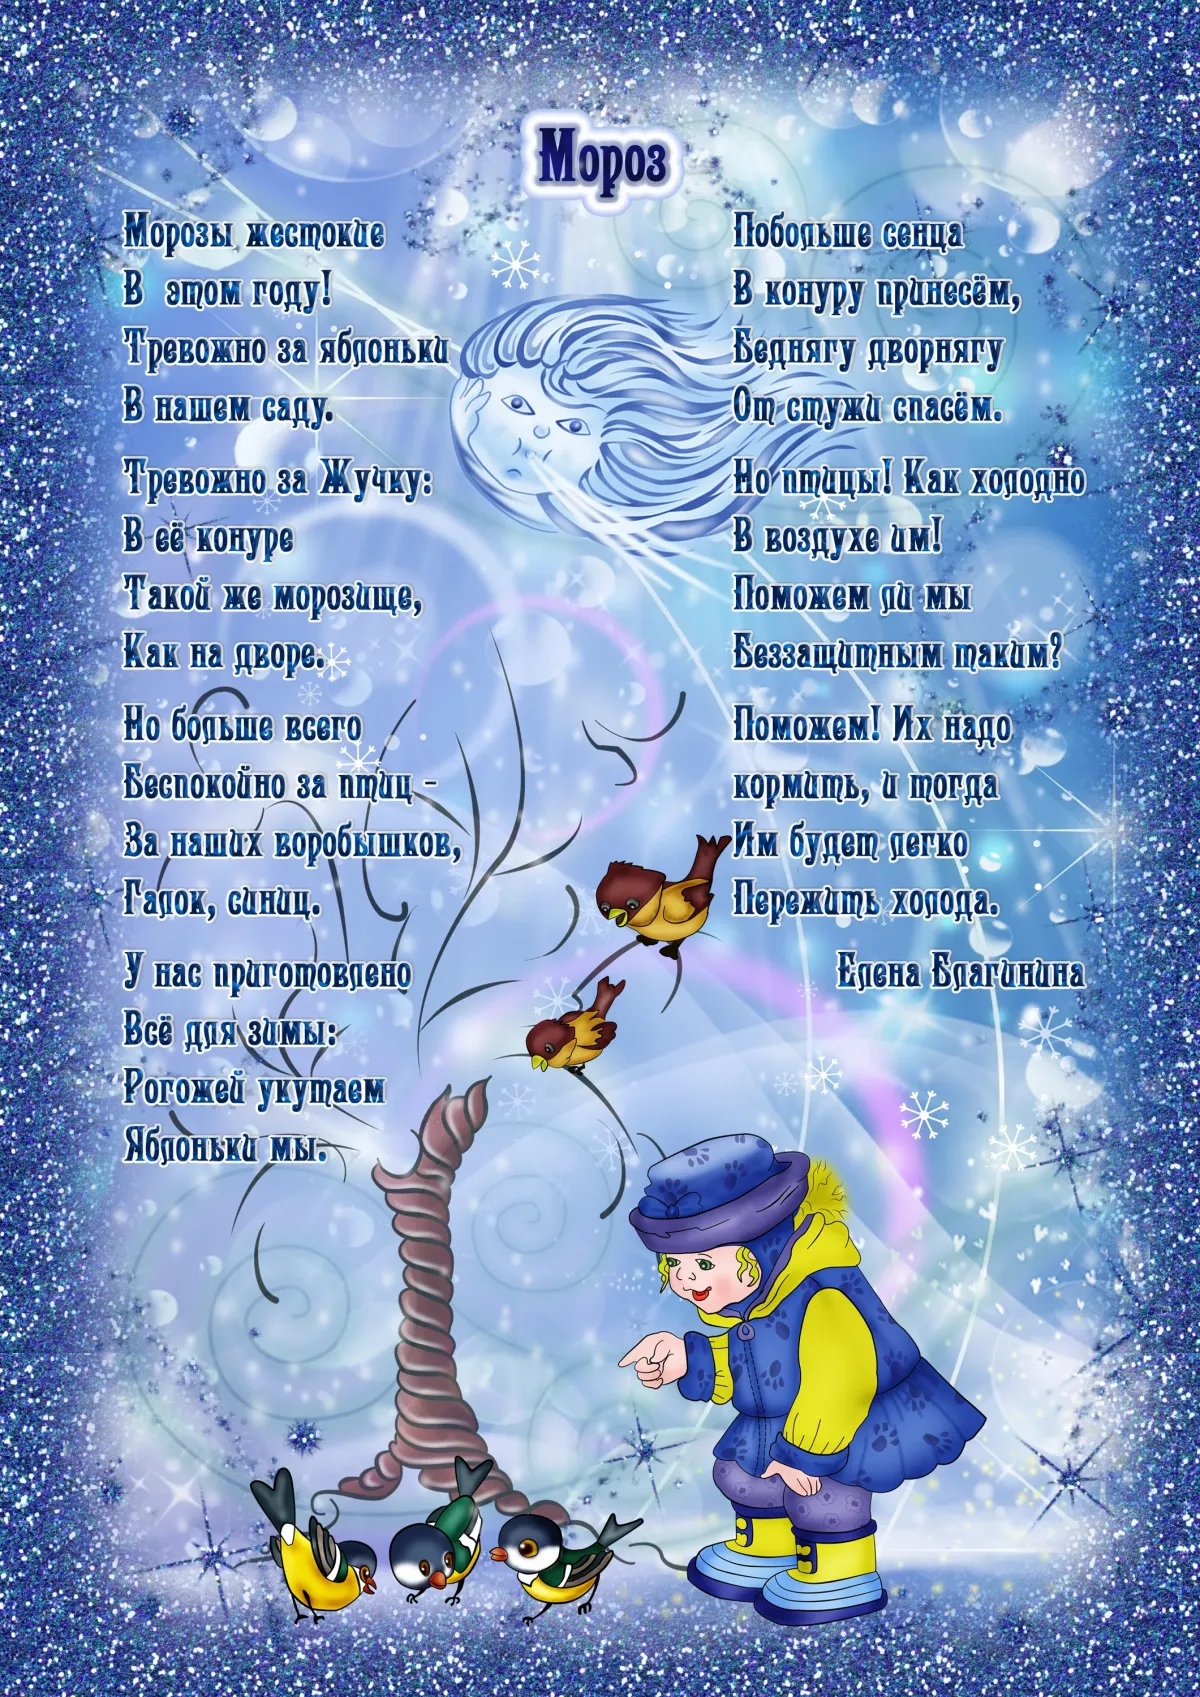 Красивое стихотворение про ребенка. Стихи про зиму. Стихотворении ПРТ зиму. Стихи для дитие прозиму. Стихи про Зизу для детей.